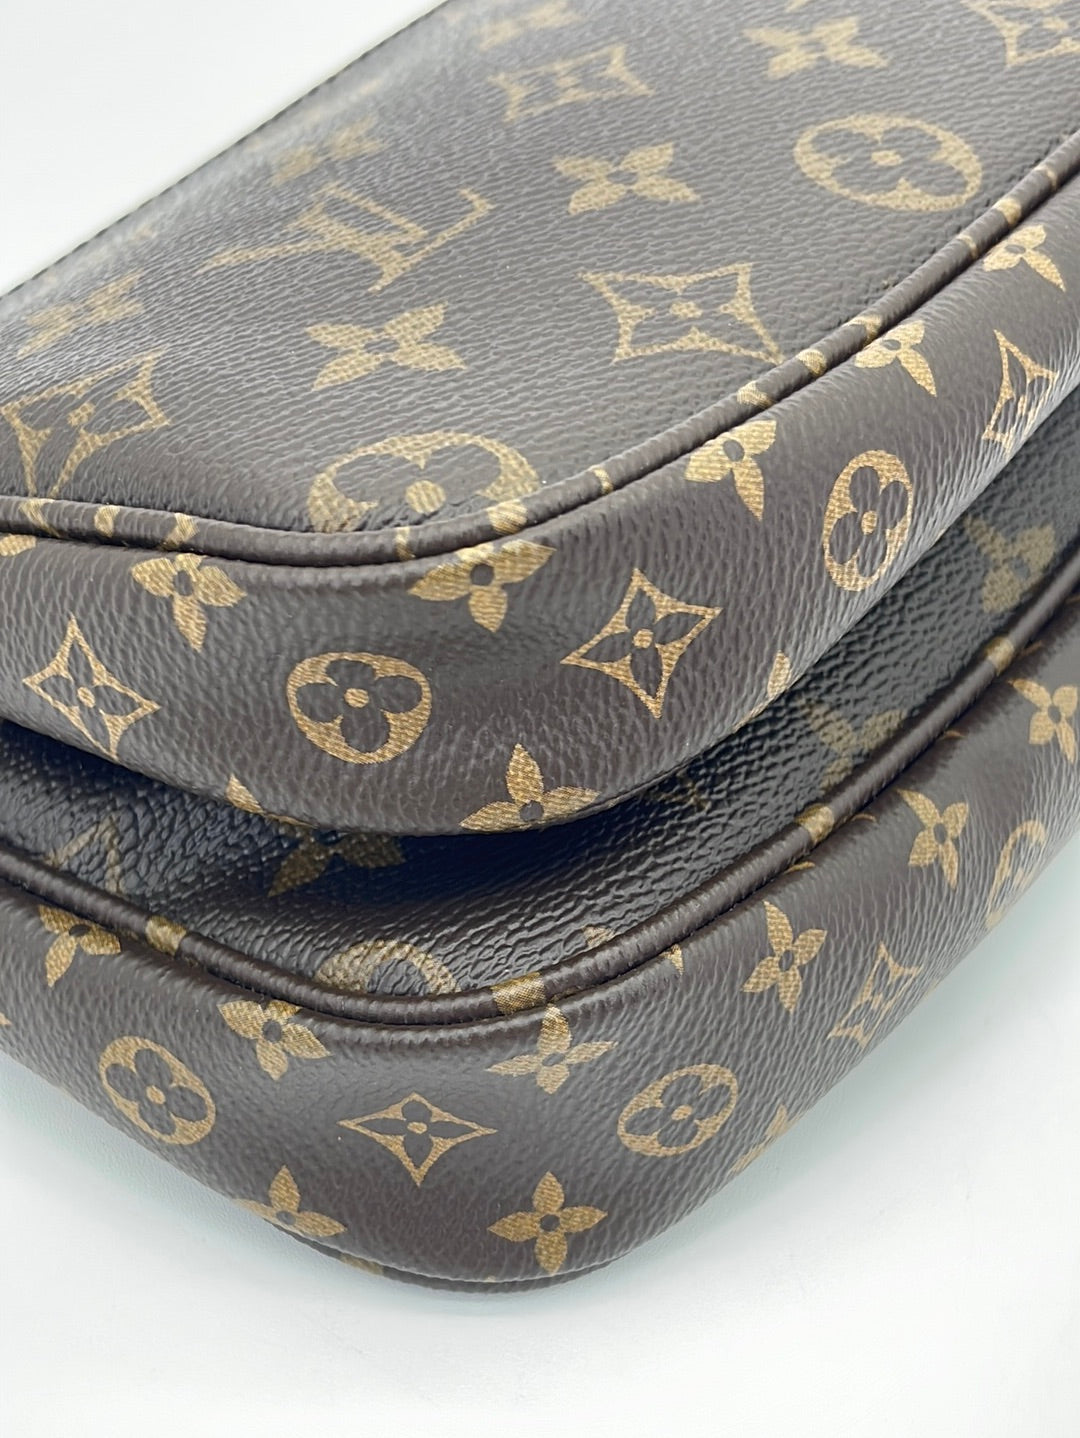 Louis Vuitton Multi Pochette Accessoires replica